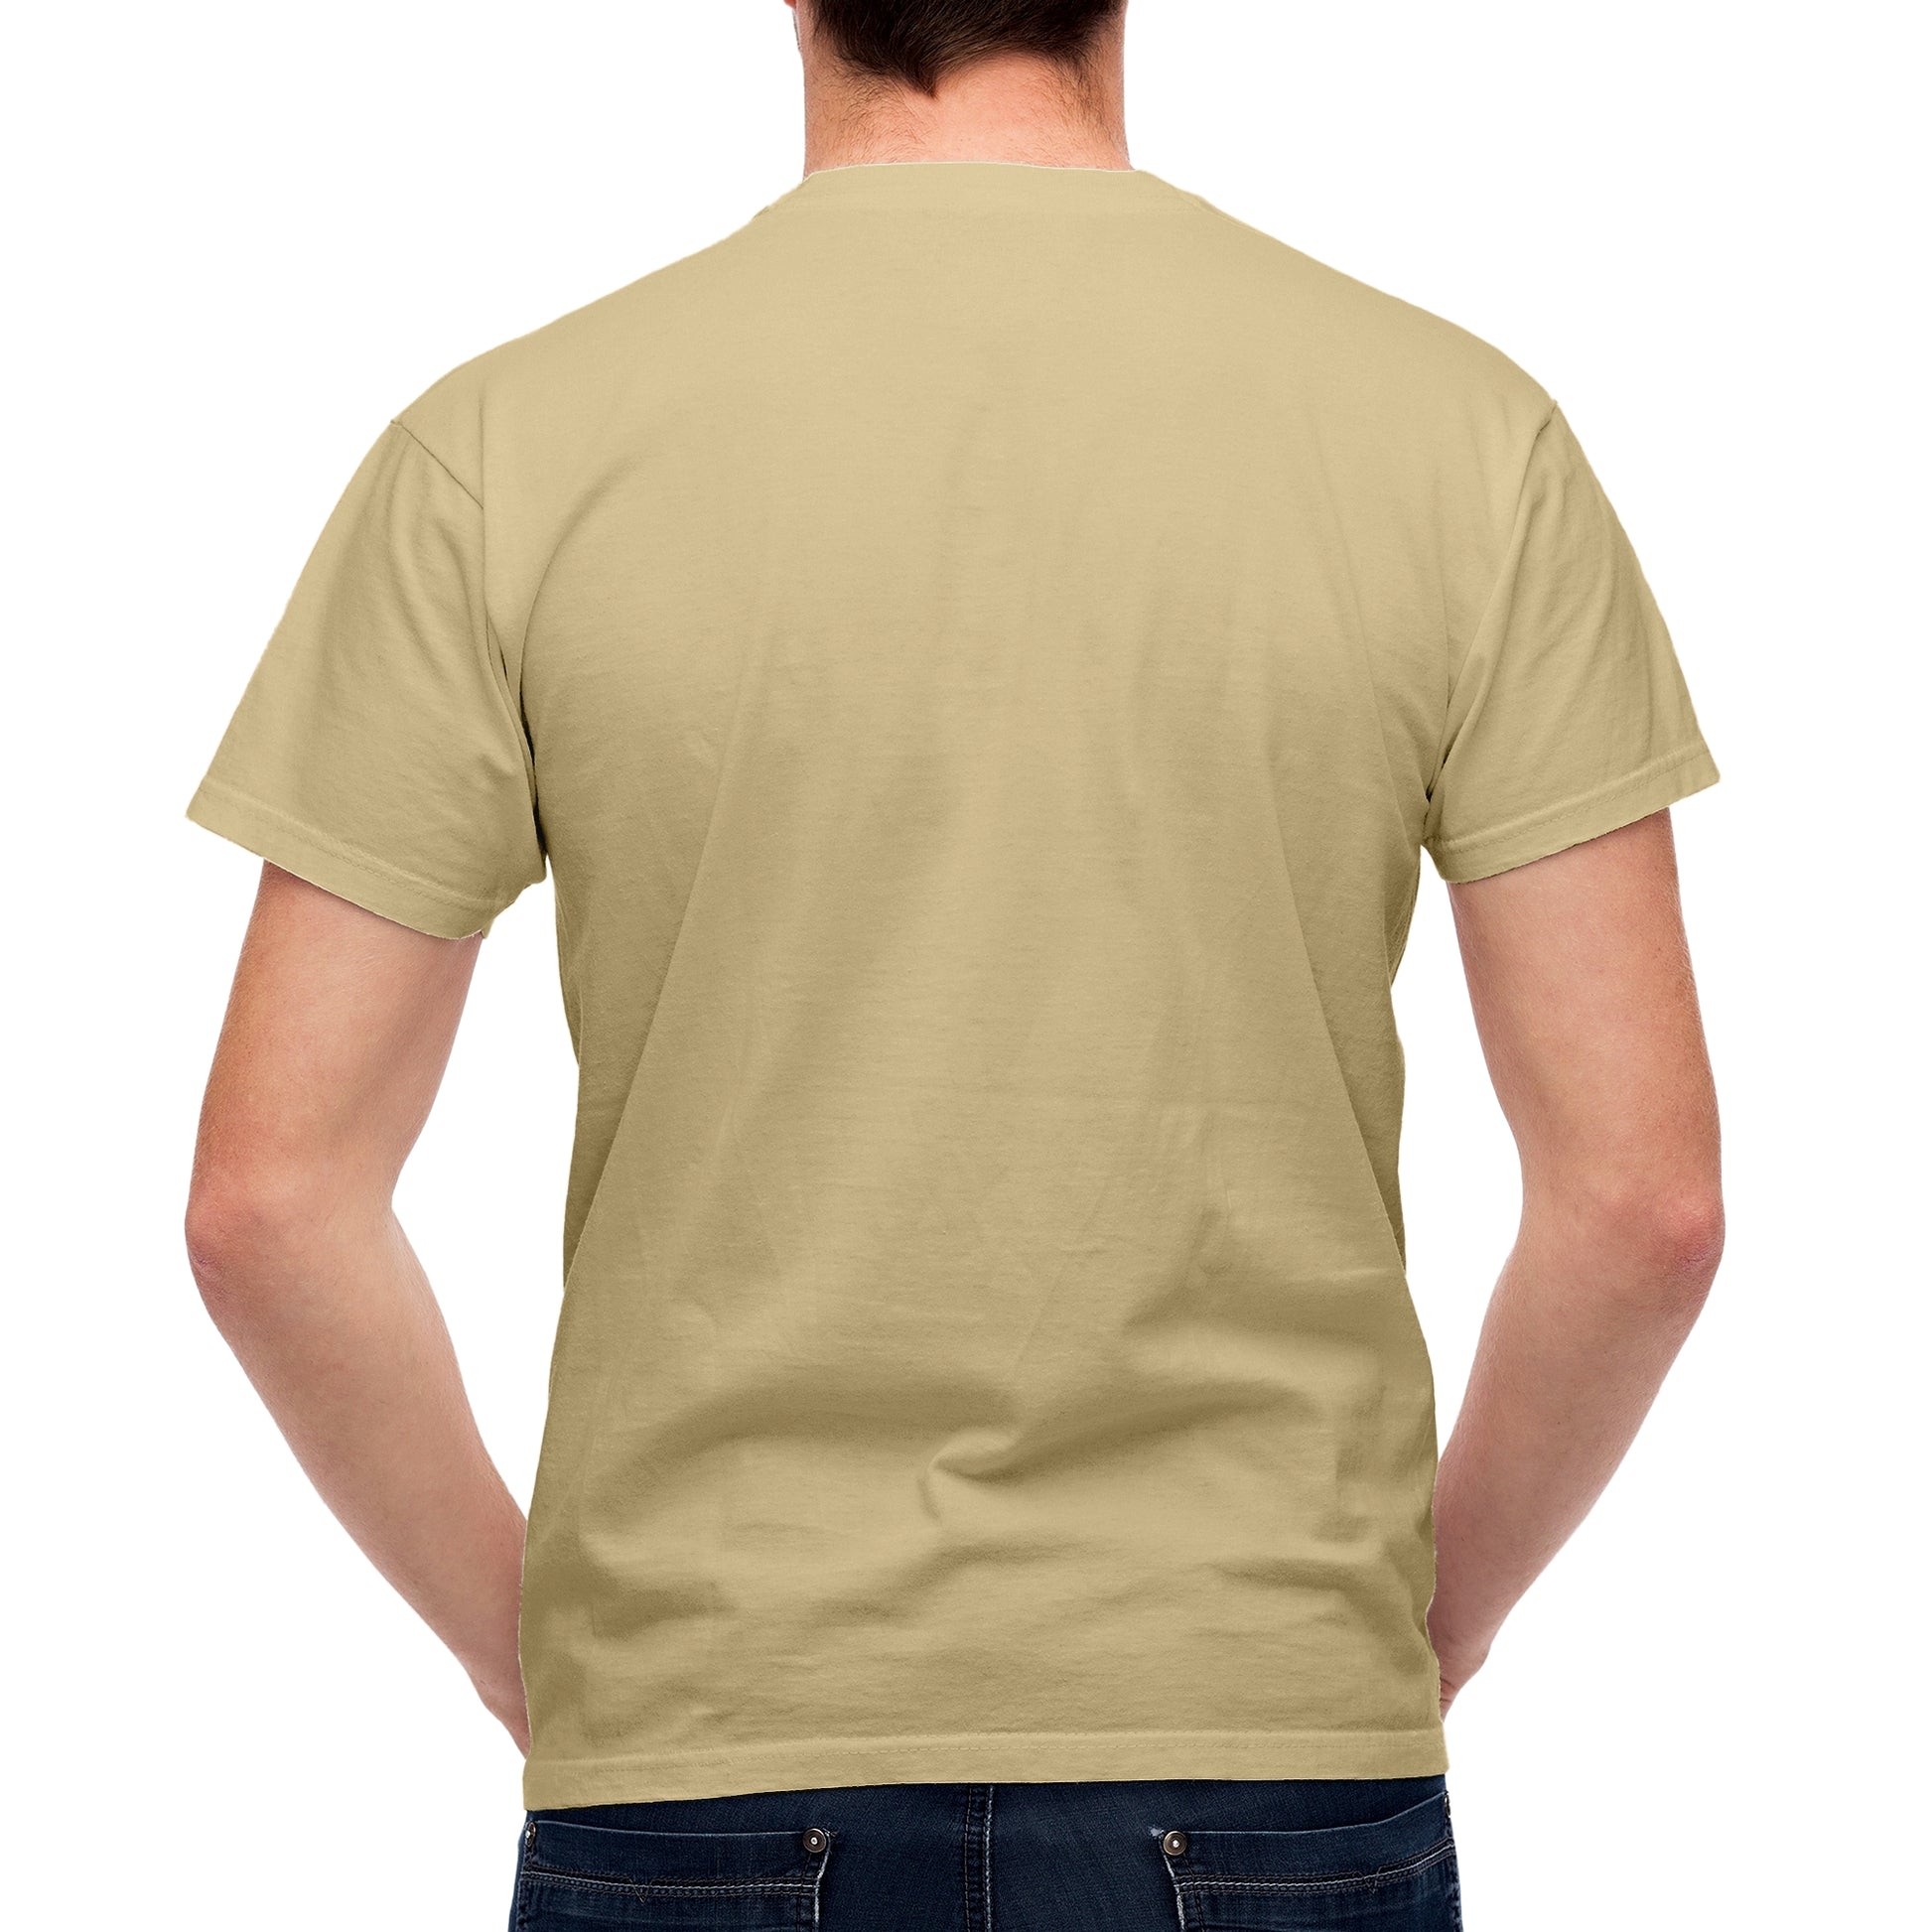 Half Sleeves  Cream T-shirt For Men - FlyingCart.pk